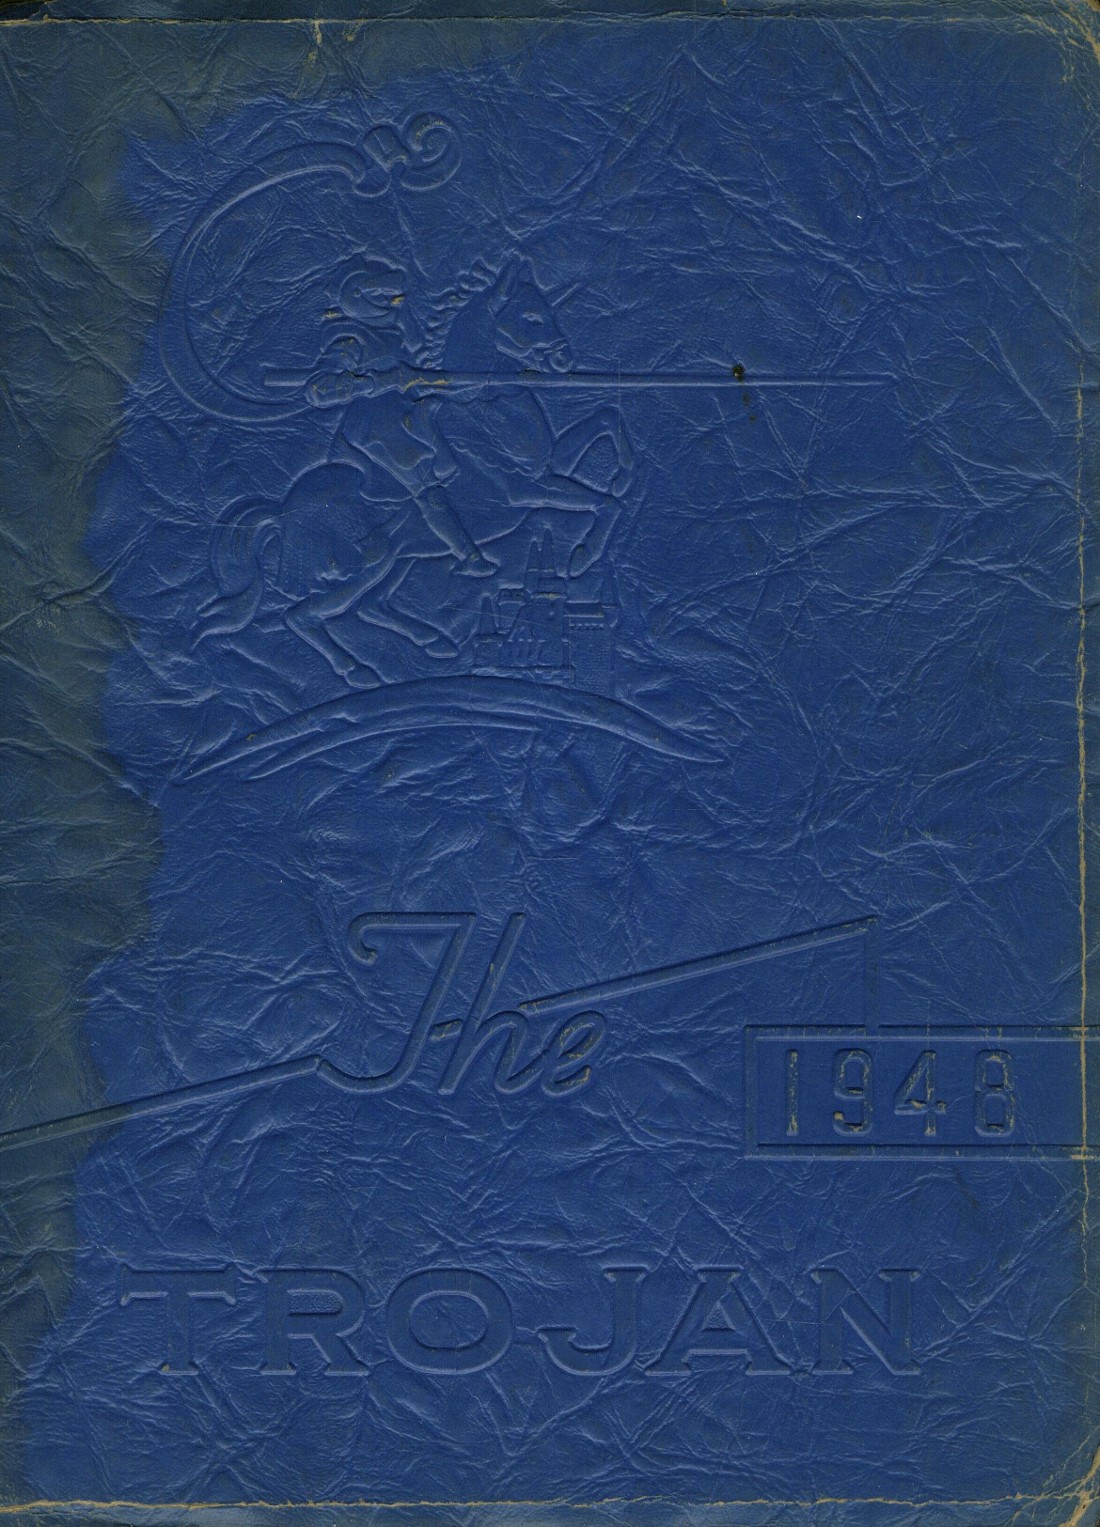 1948 yearbook from Lemoyne High School from Lemoyne, Pennsylvania for sale